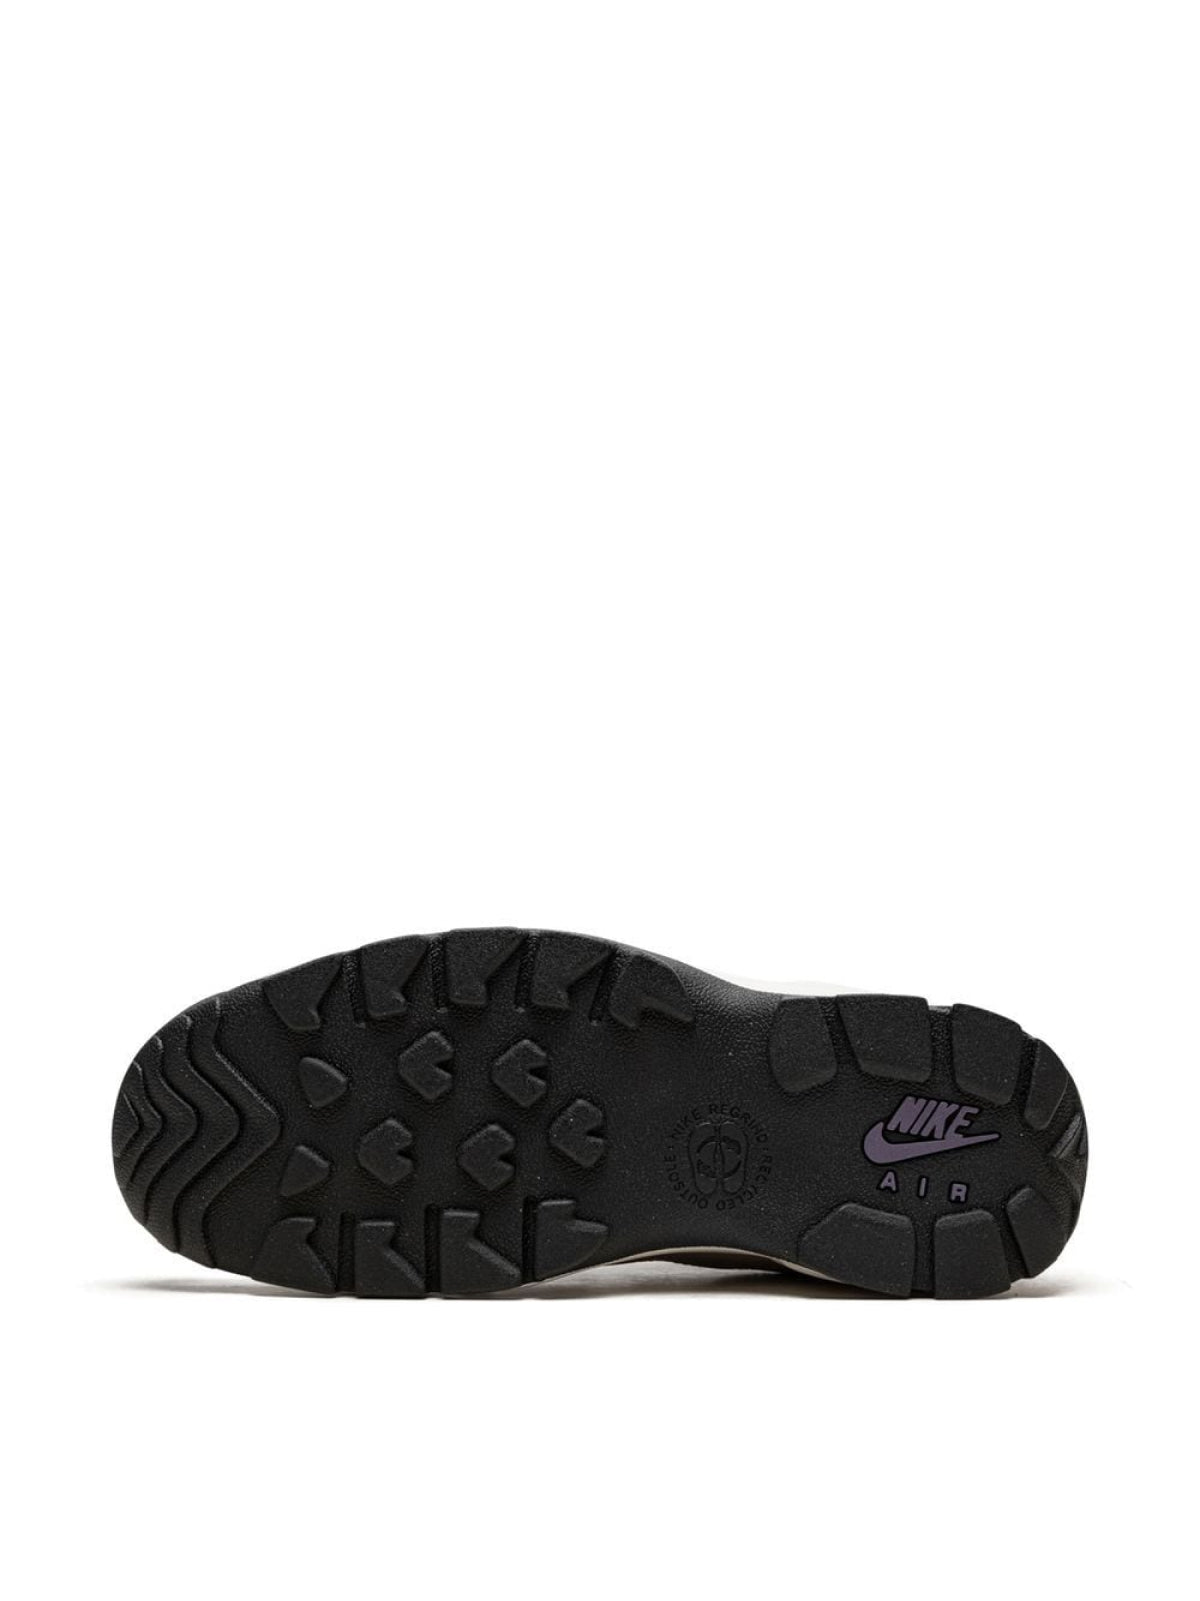 Nike-OUTLET-SALE-ACG Air Mada Hemp Sneakers-ARCHIVIST